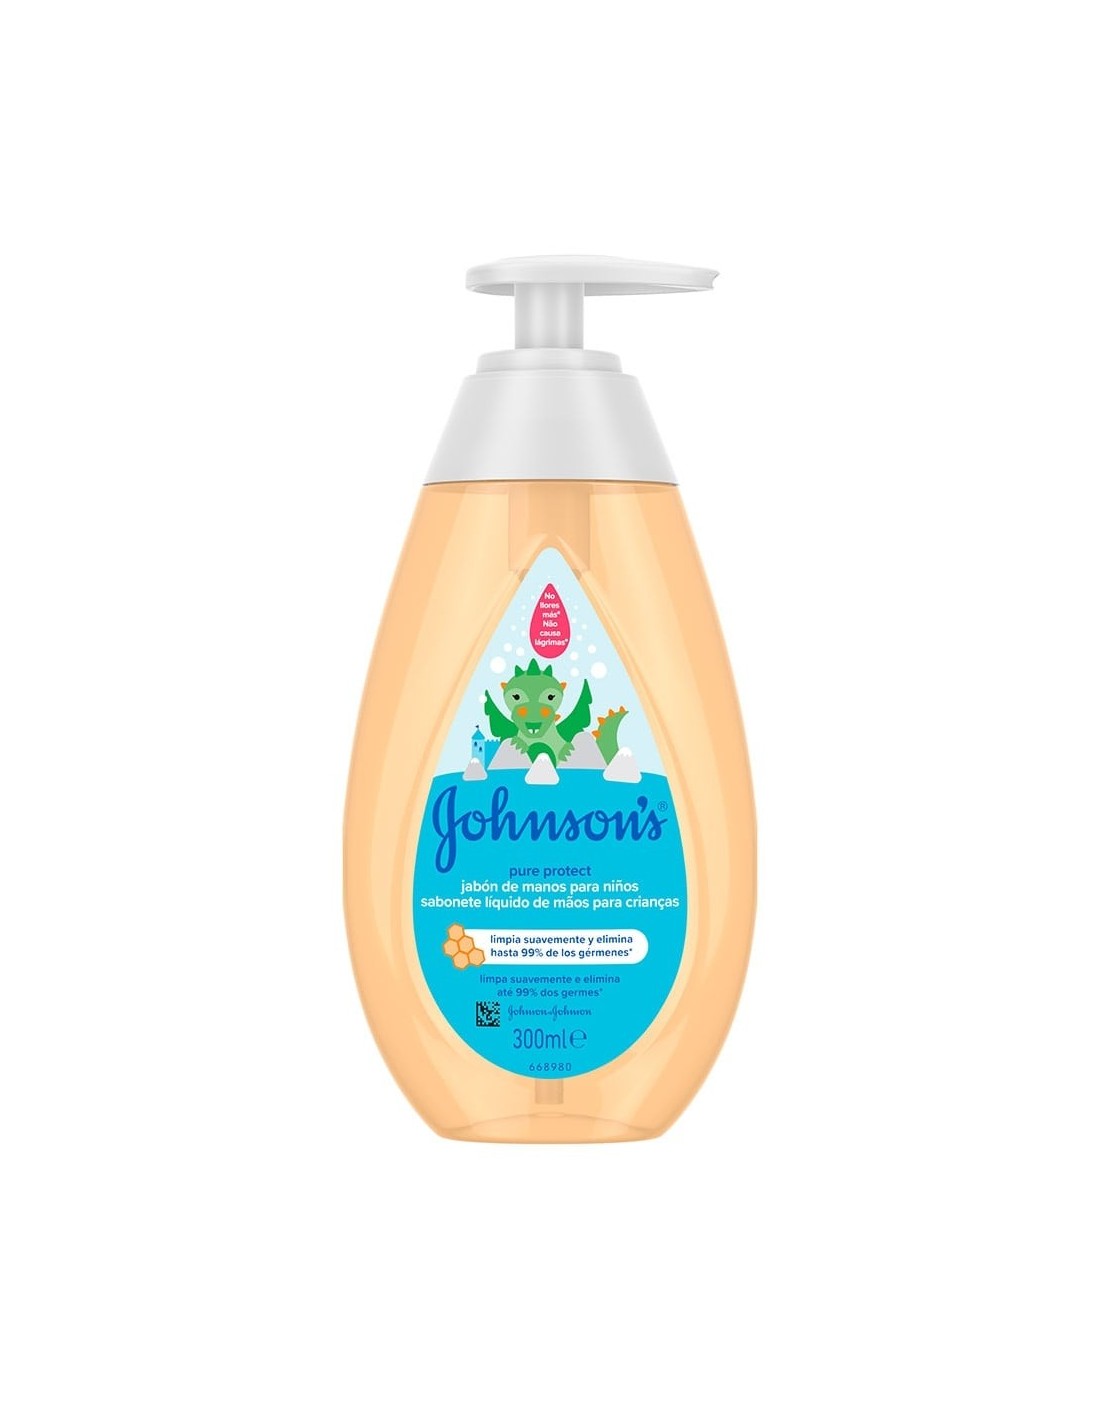 Johnsons Pure Protect Jabón de Manos 300 ml